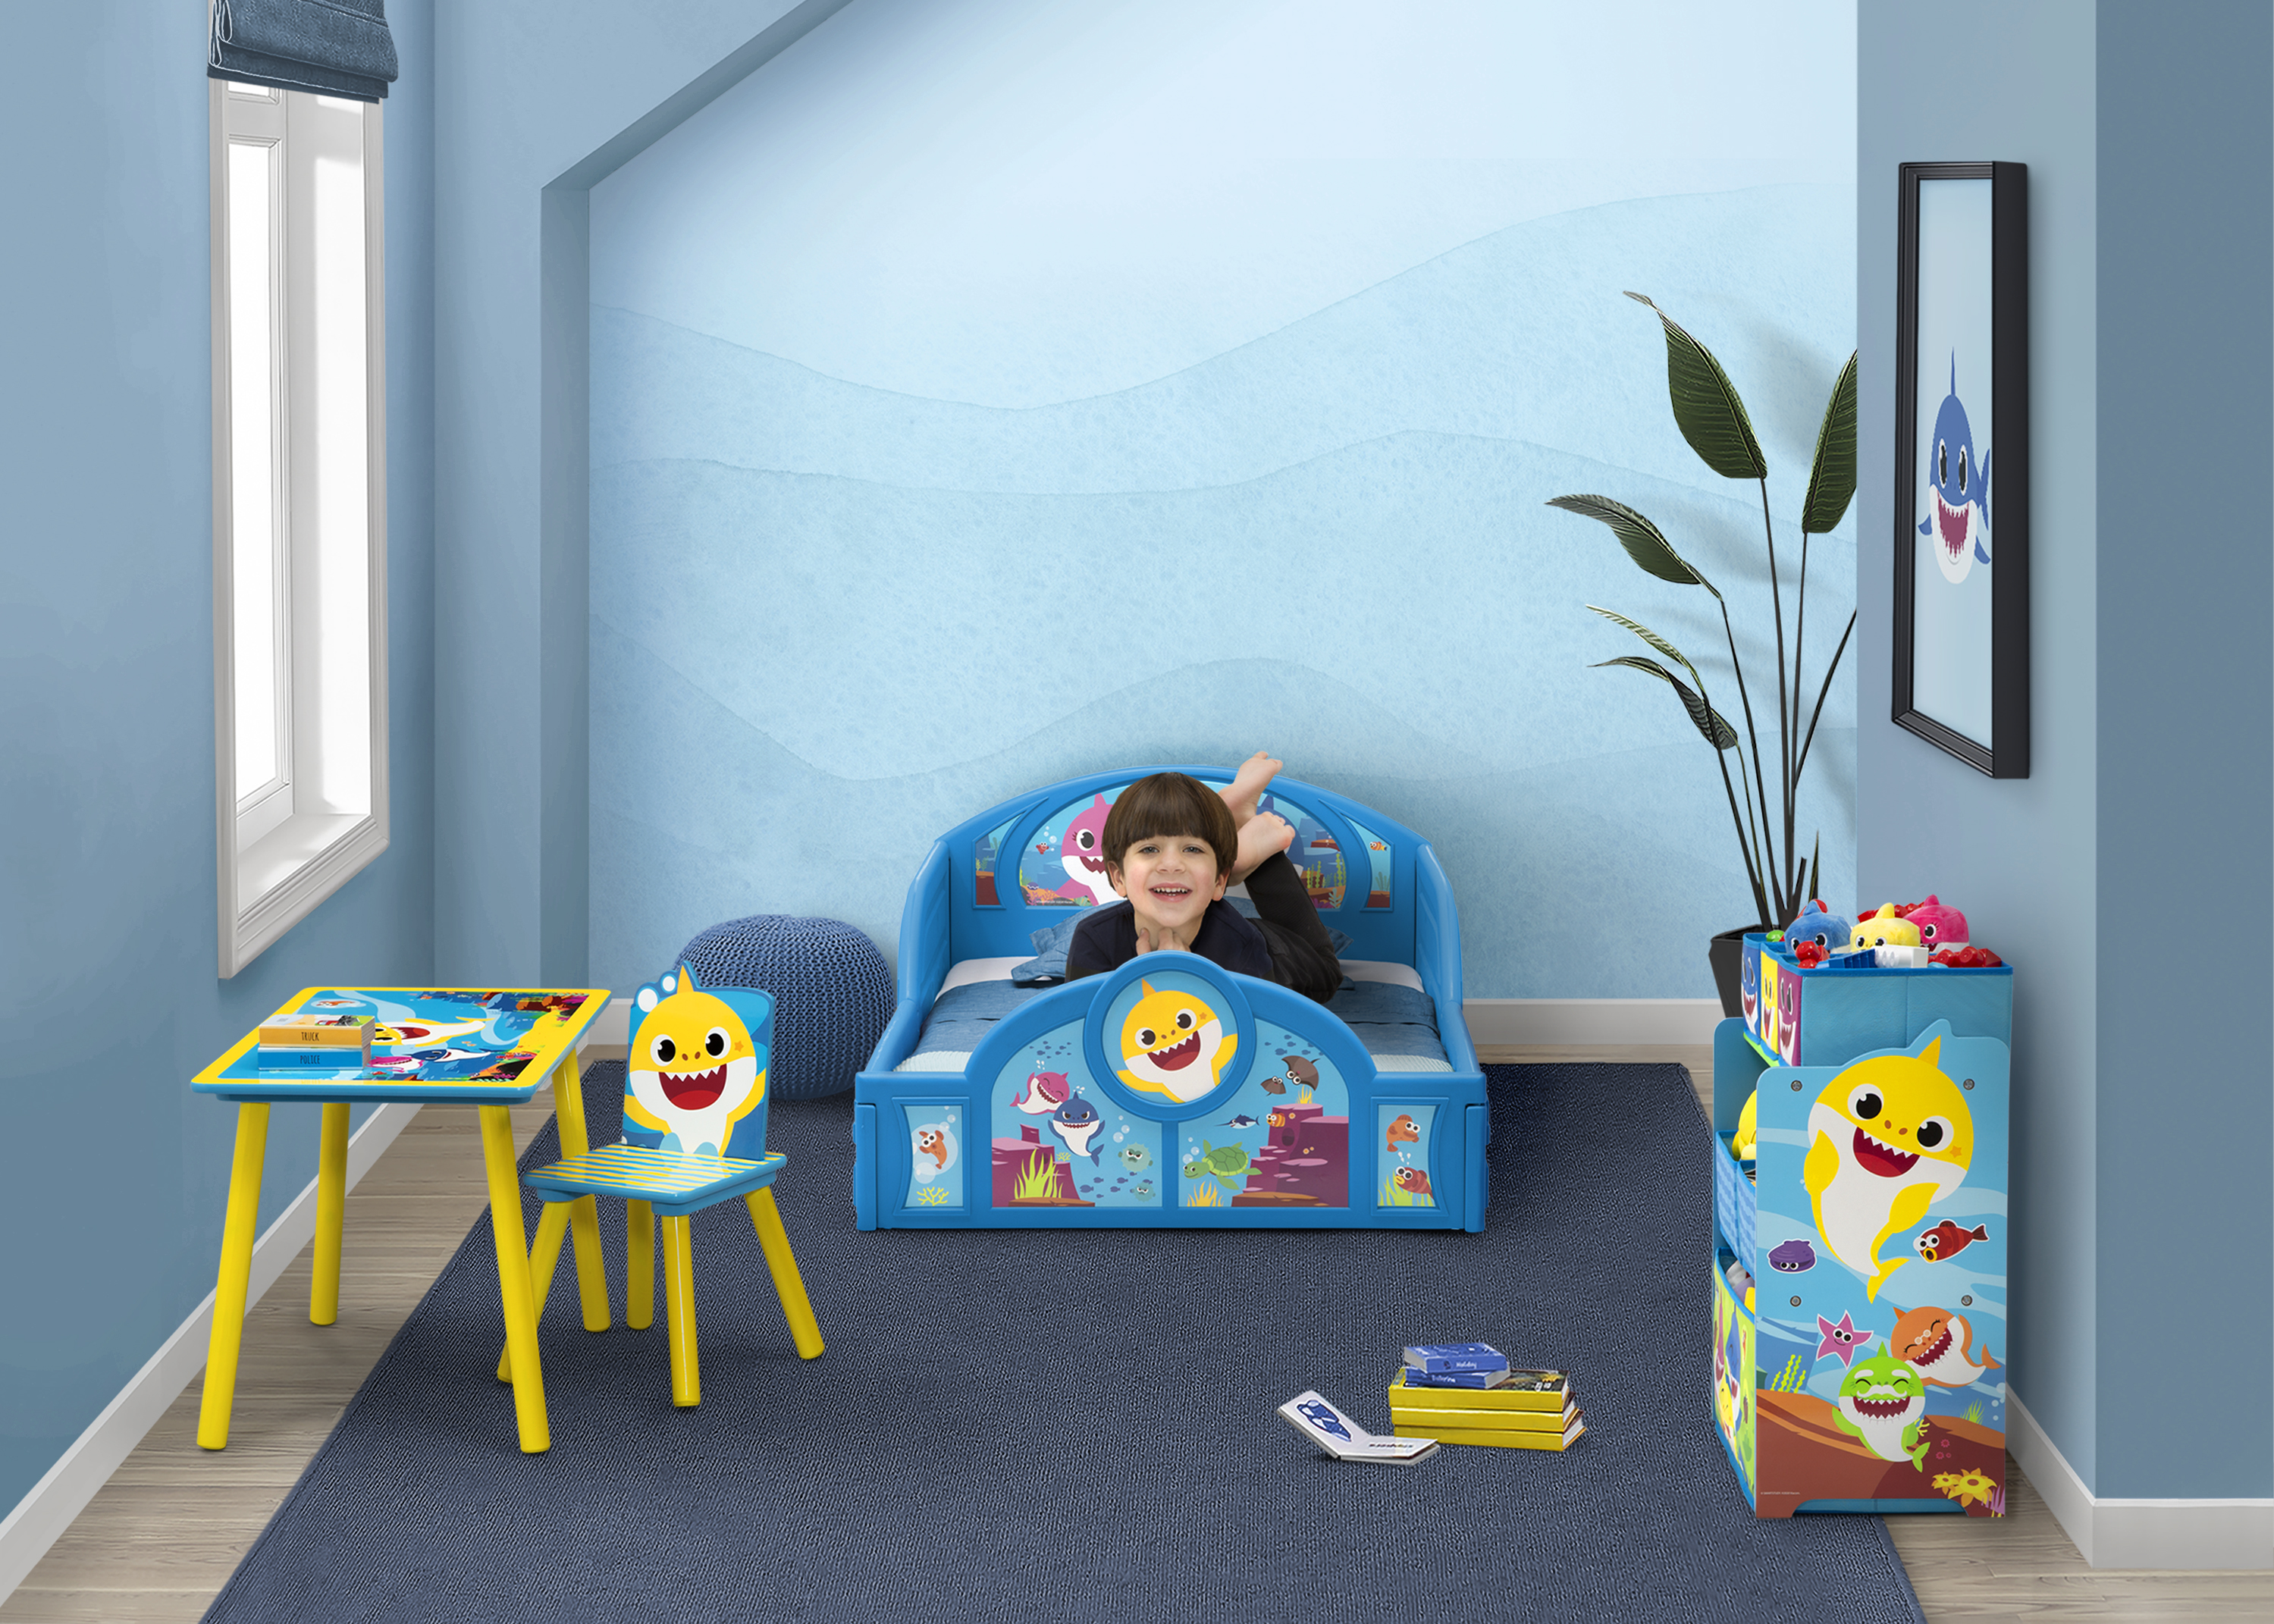 Baby Shark 4-Piece Room-in-a-Box Bedroom Set by Delta Children - image 3 of 20